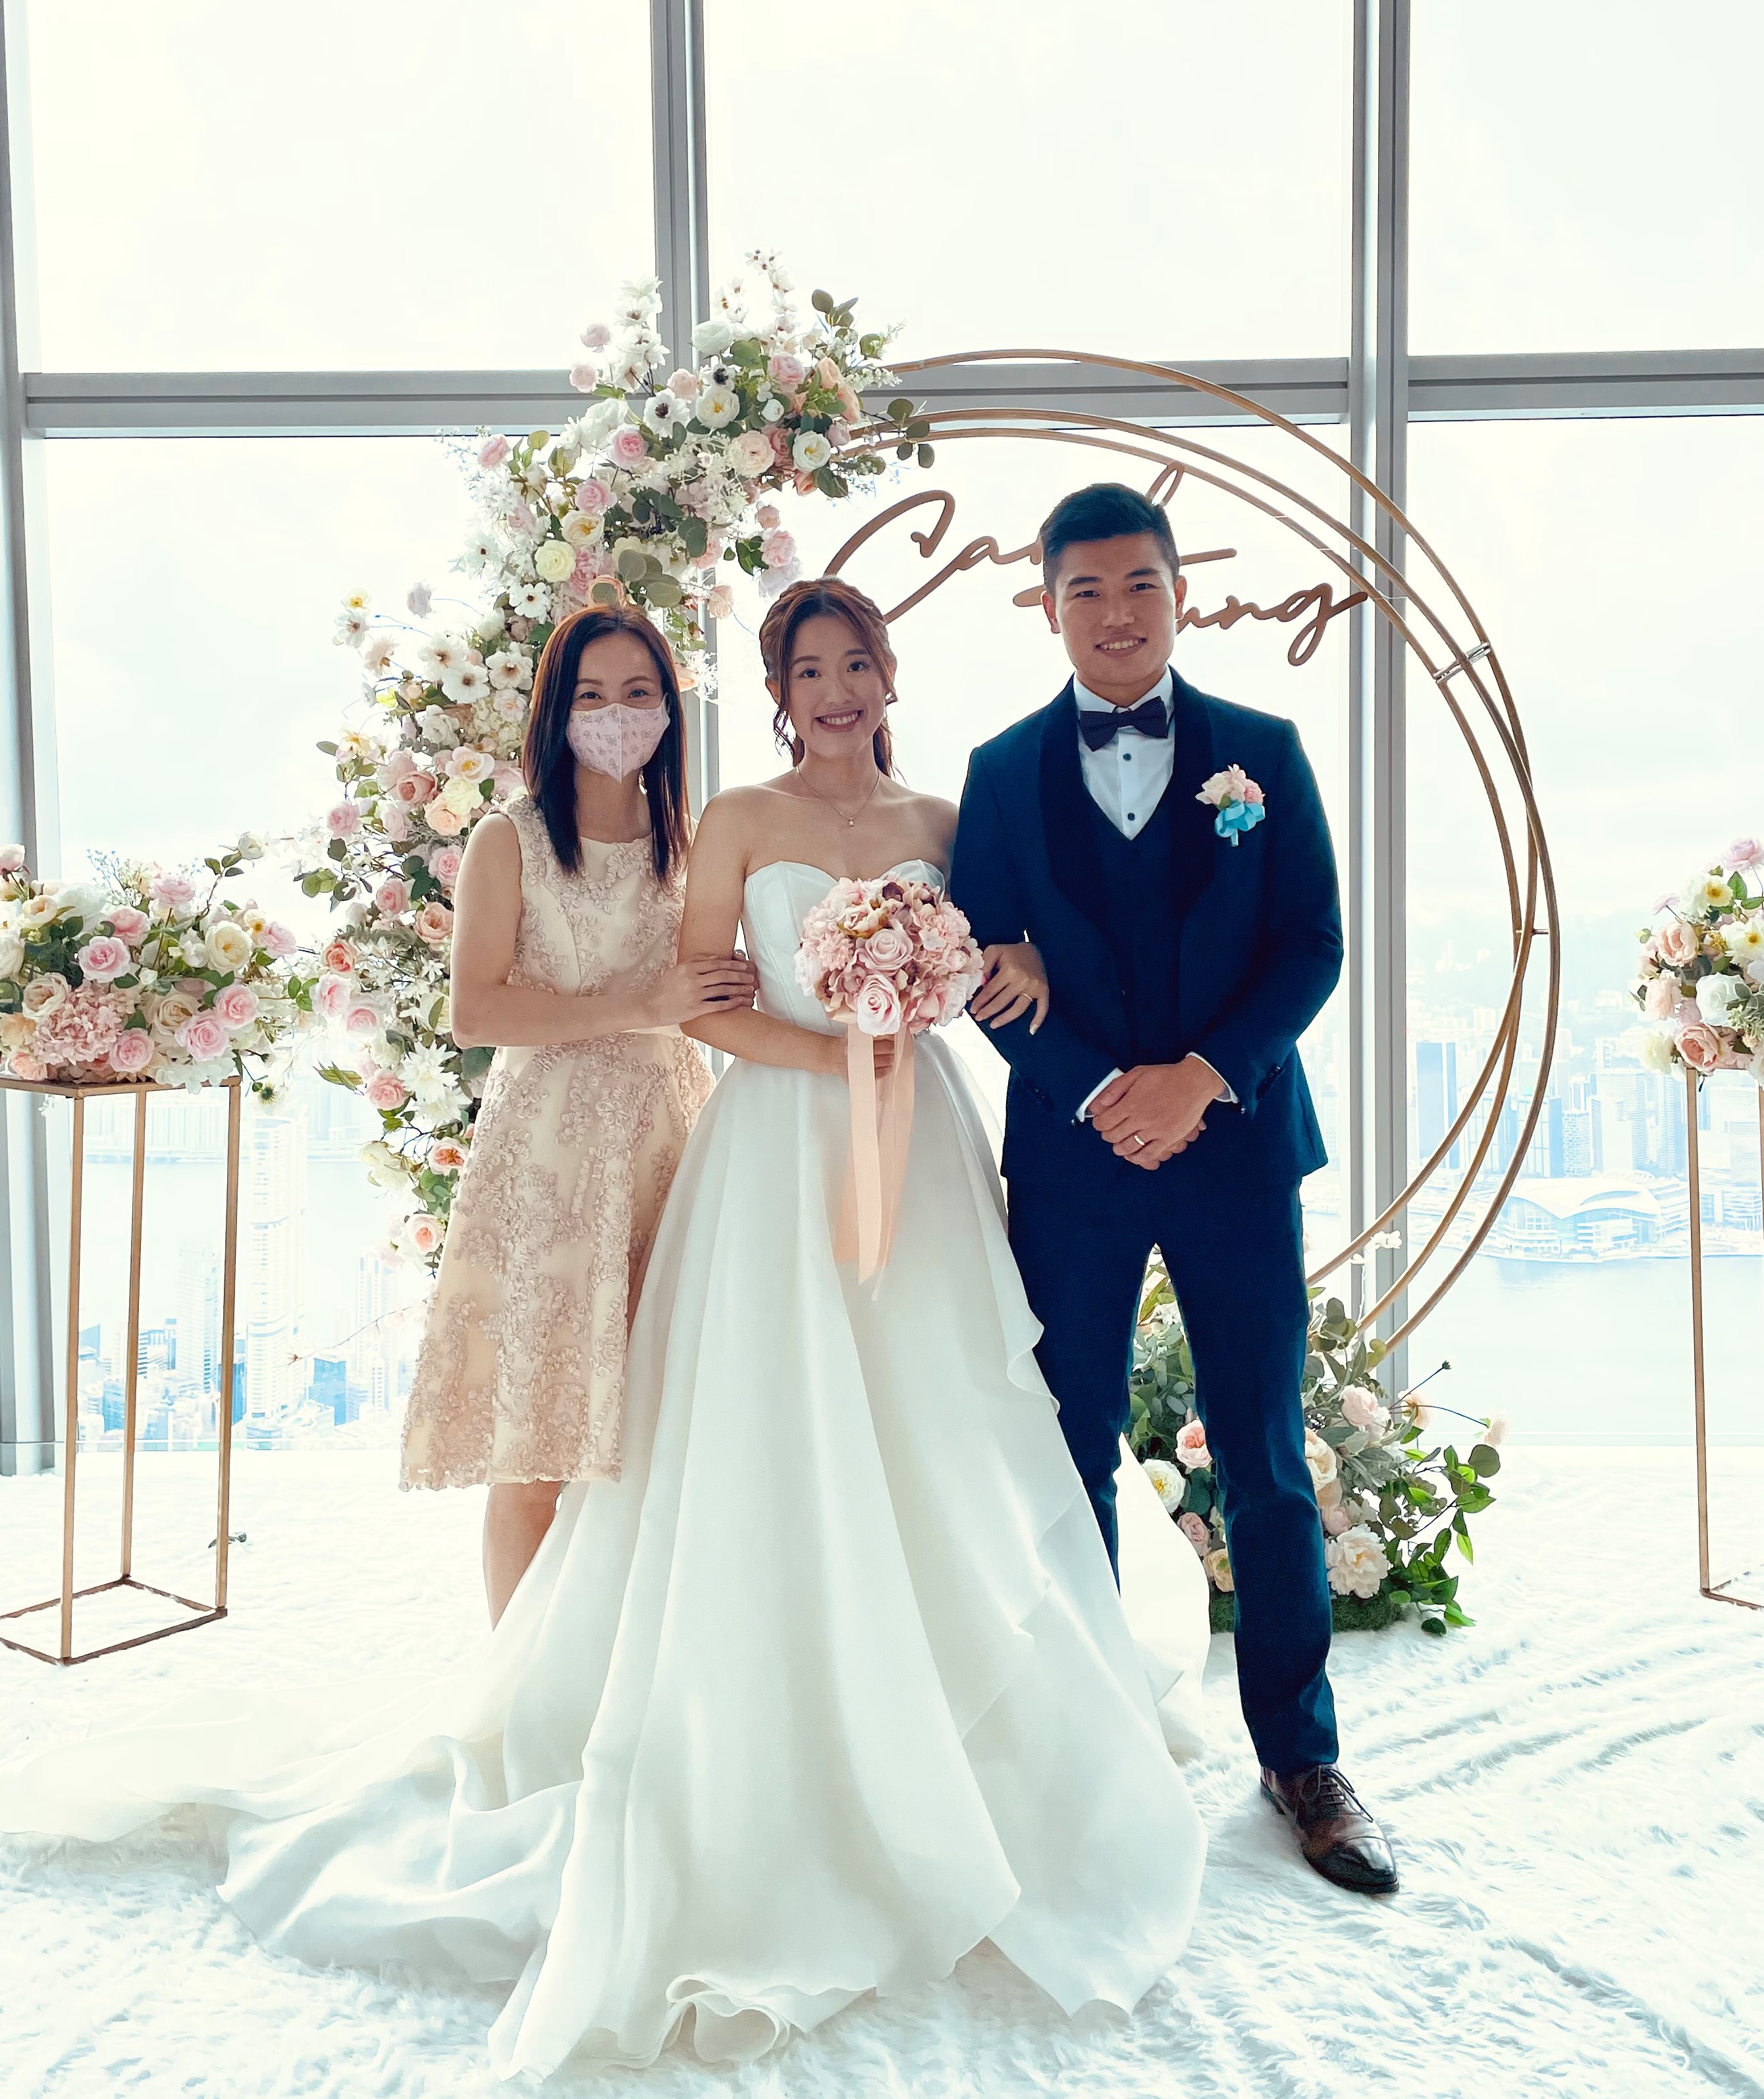 Bless Wedding 首席婚禮統籌及司儀 Angel Leung之婚禮統籌師紀錄: 西式婚禮統籌 - 半日婚禮統籌 + 婚禮司儀 Wedding Planner & Wedding MC @Sky100